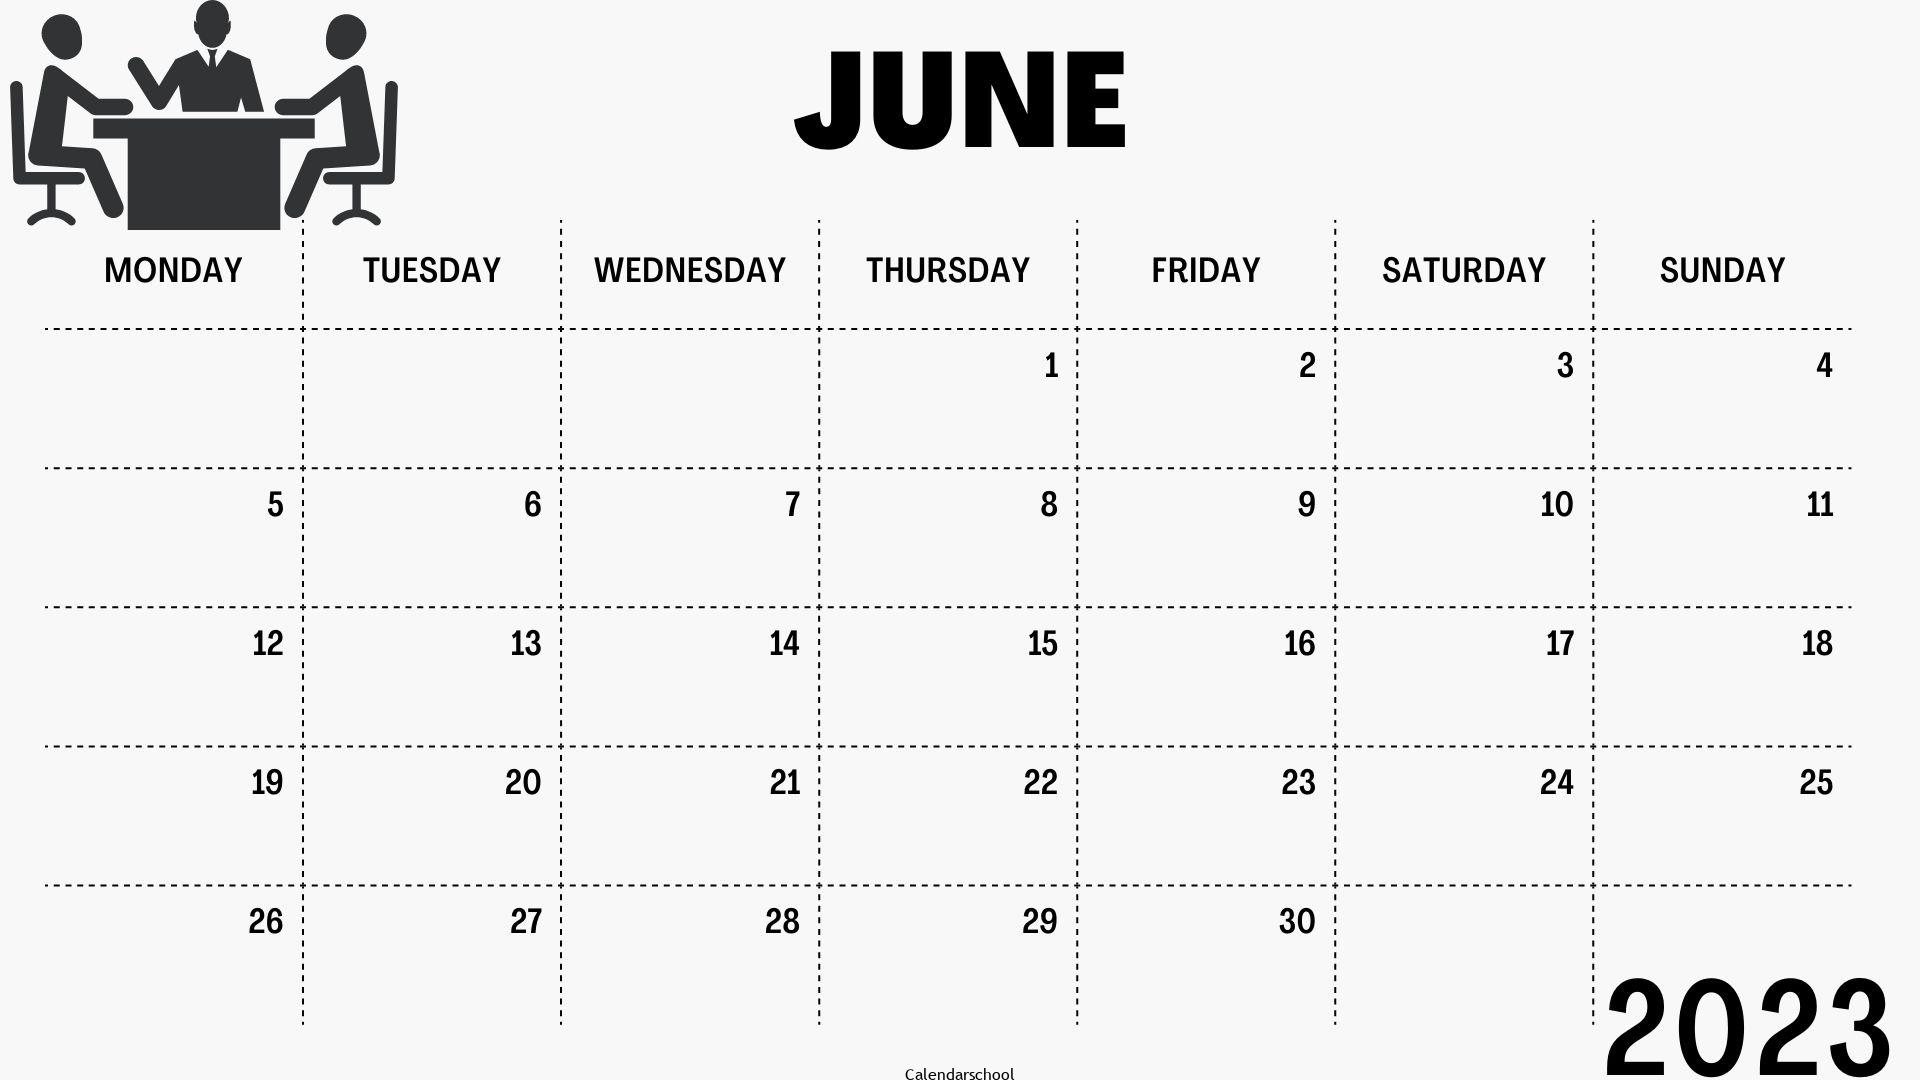 June 2023 Monthly Blank Calendar